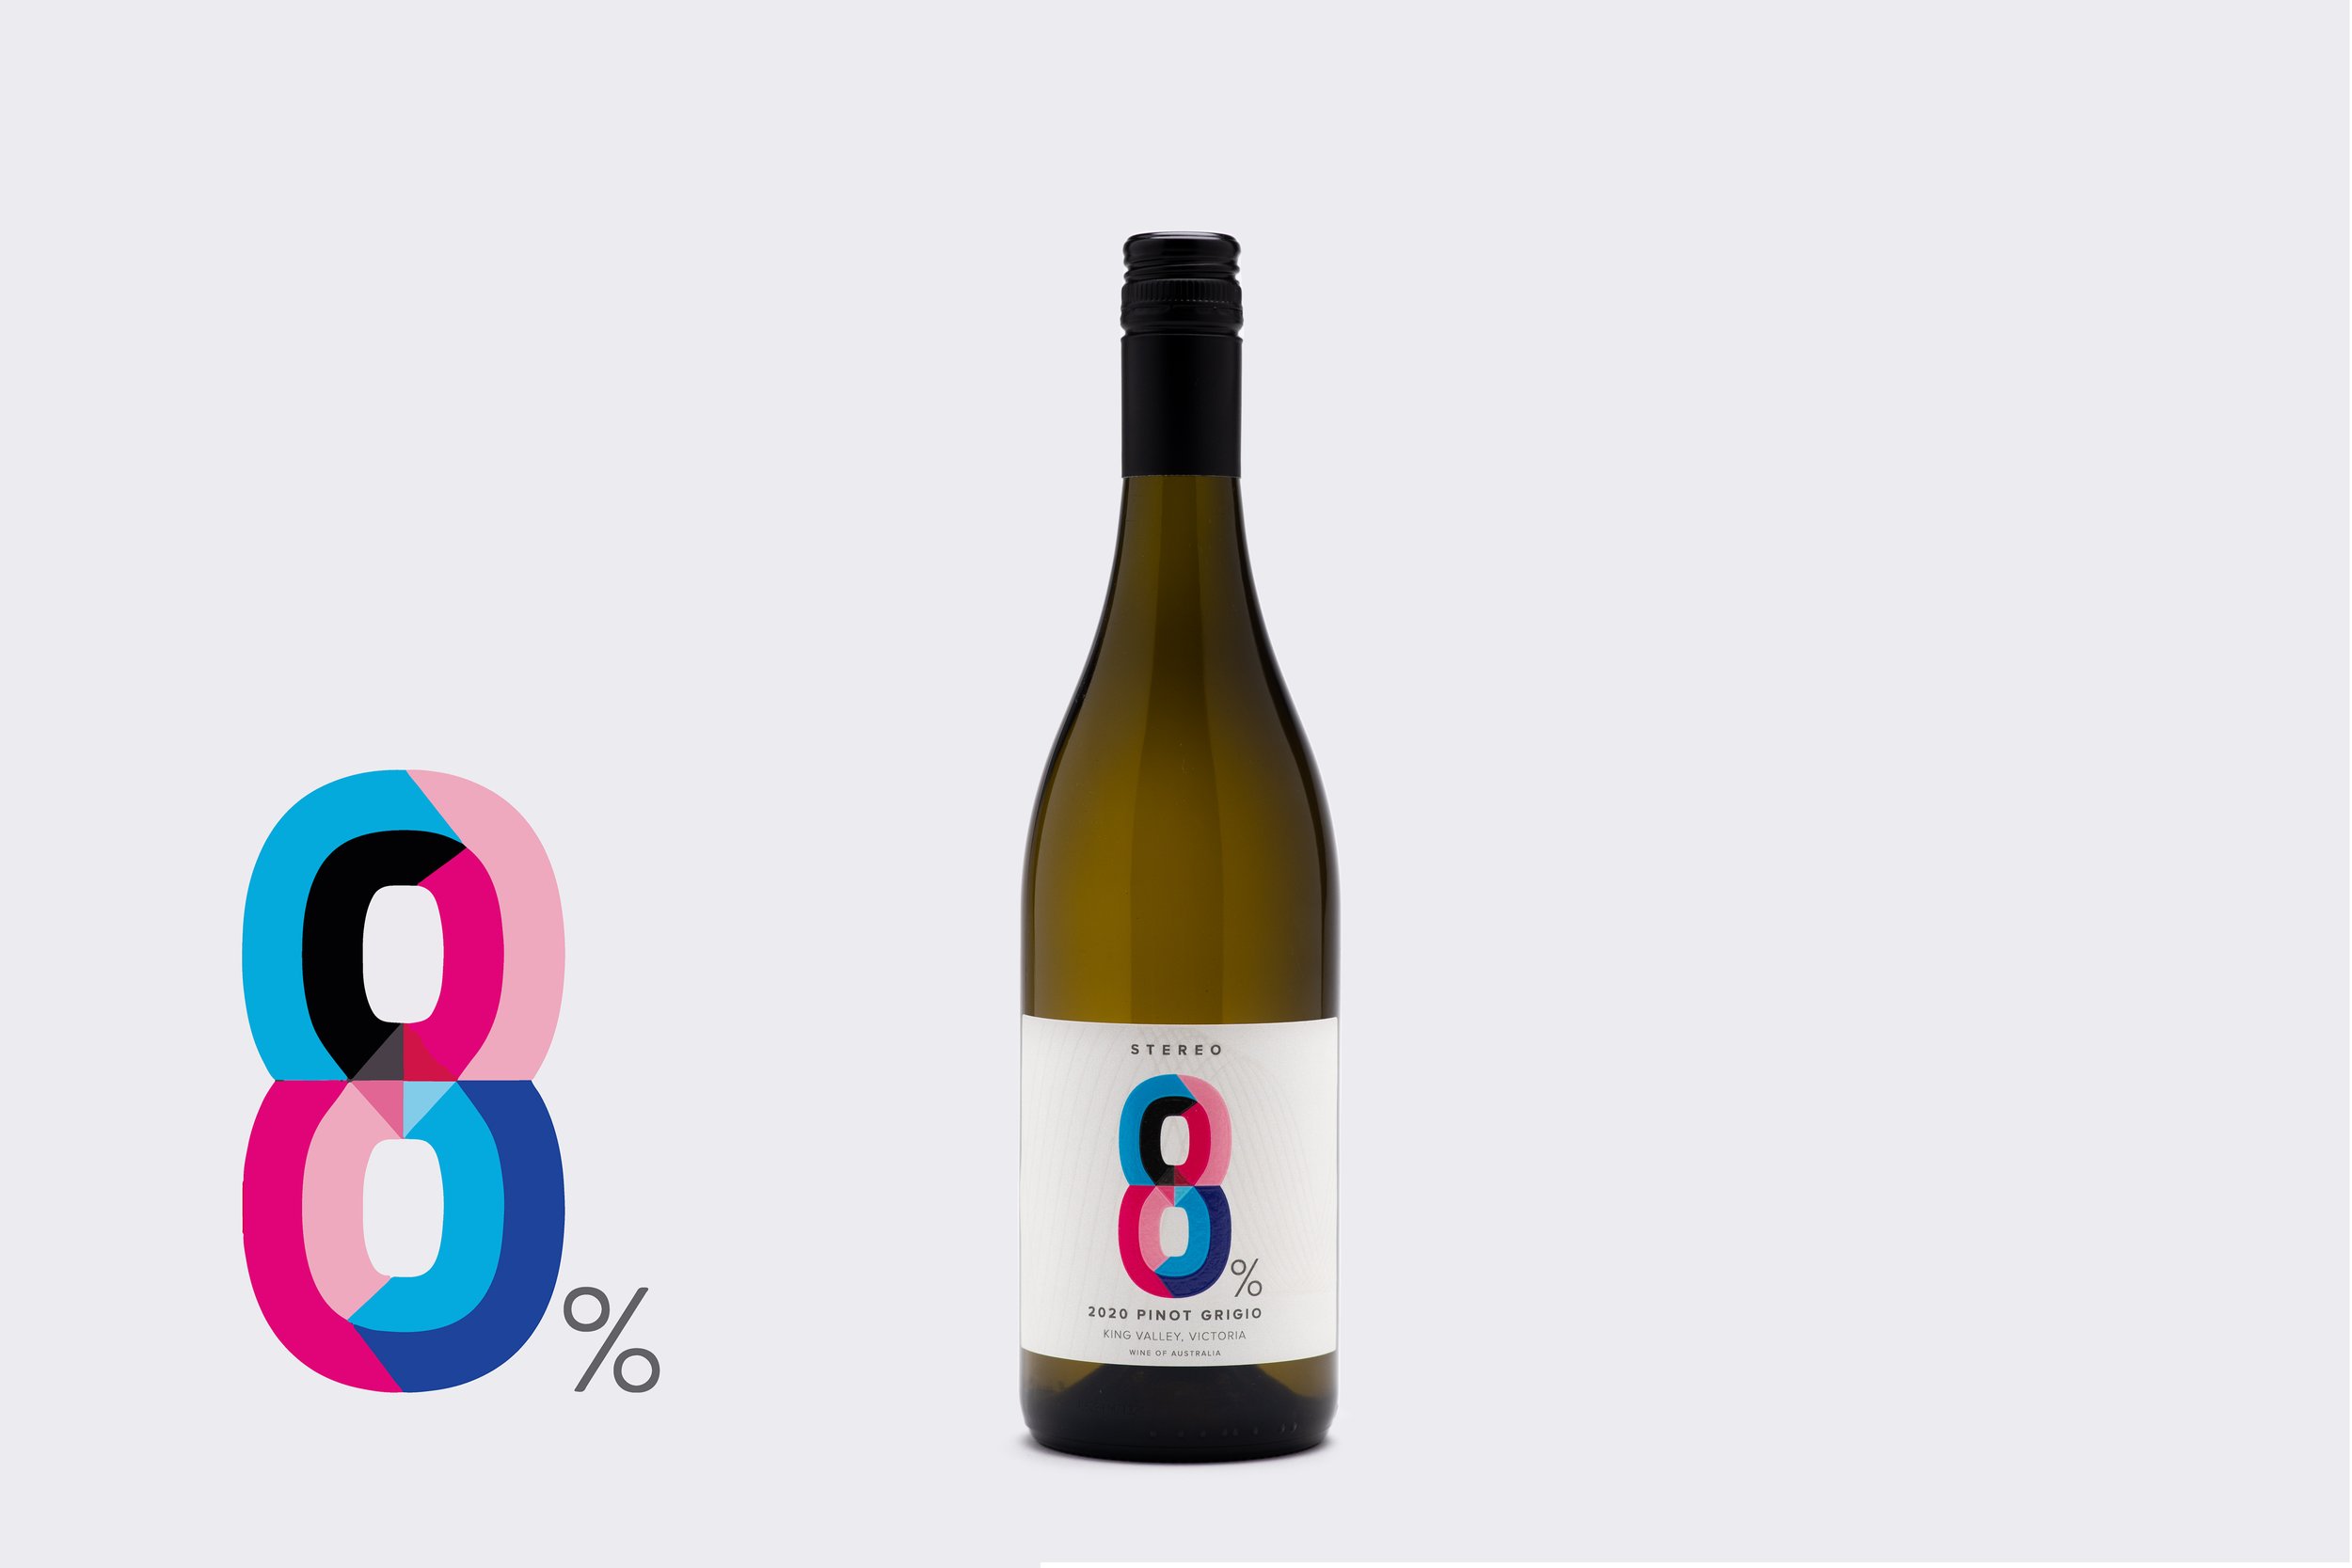 Stereo 8% Pinot Grigio